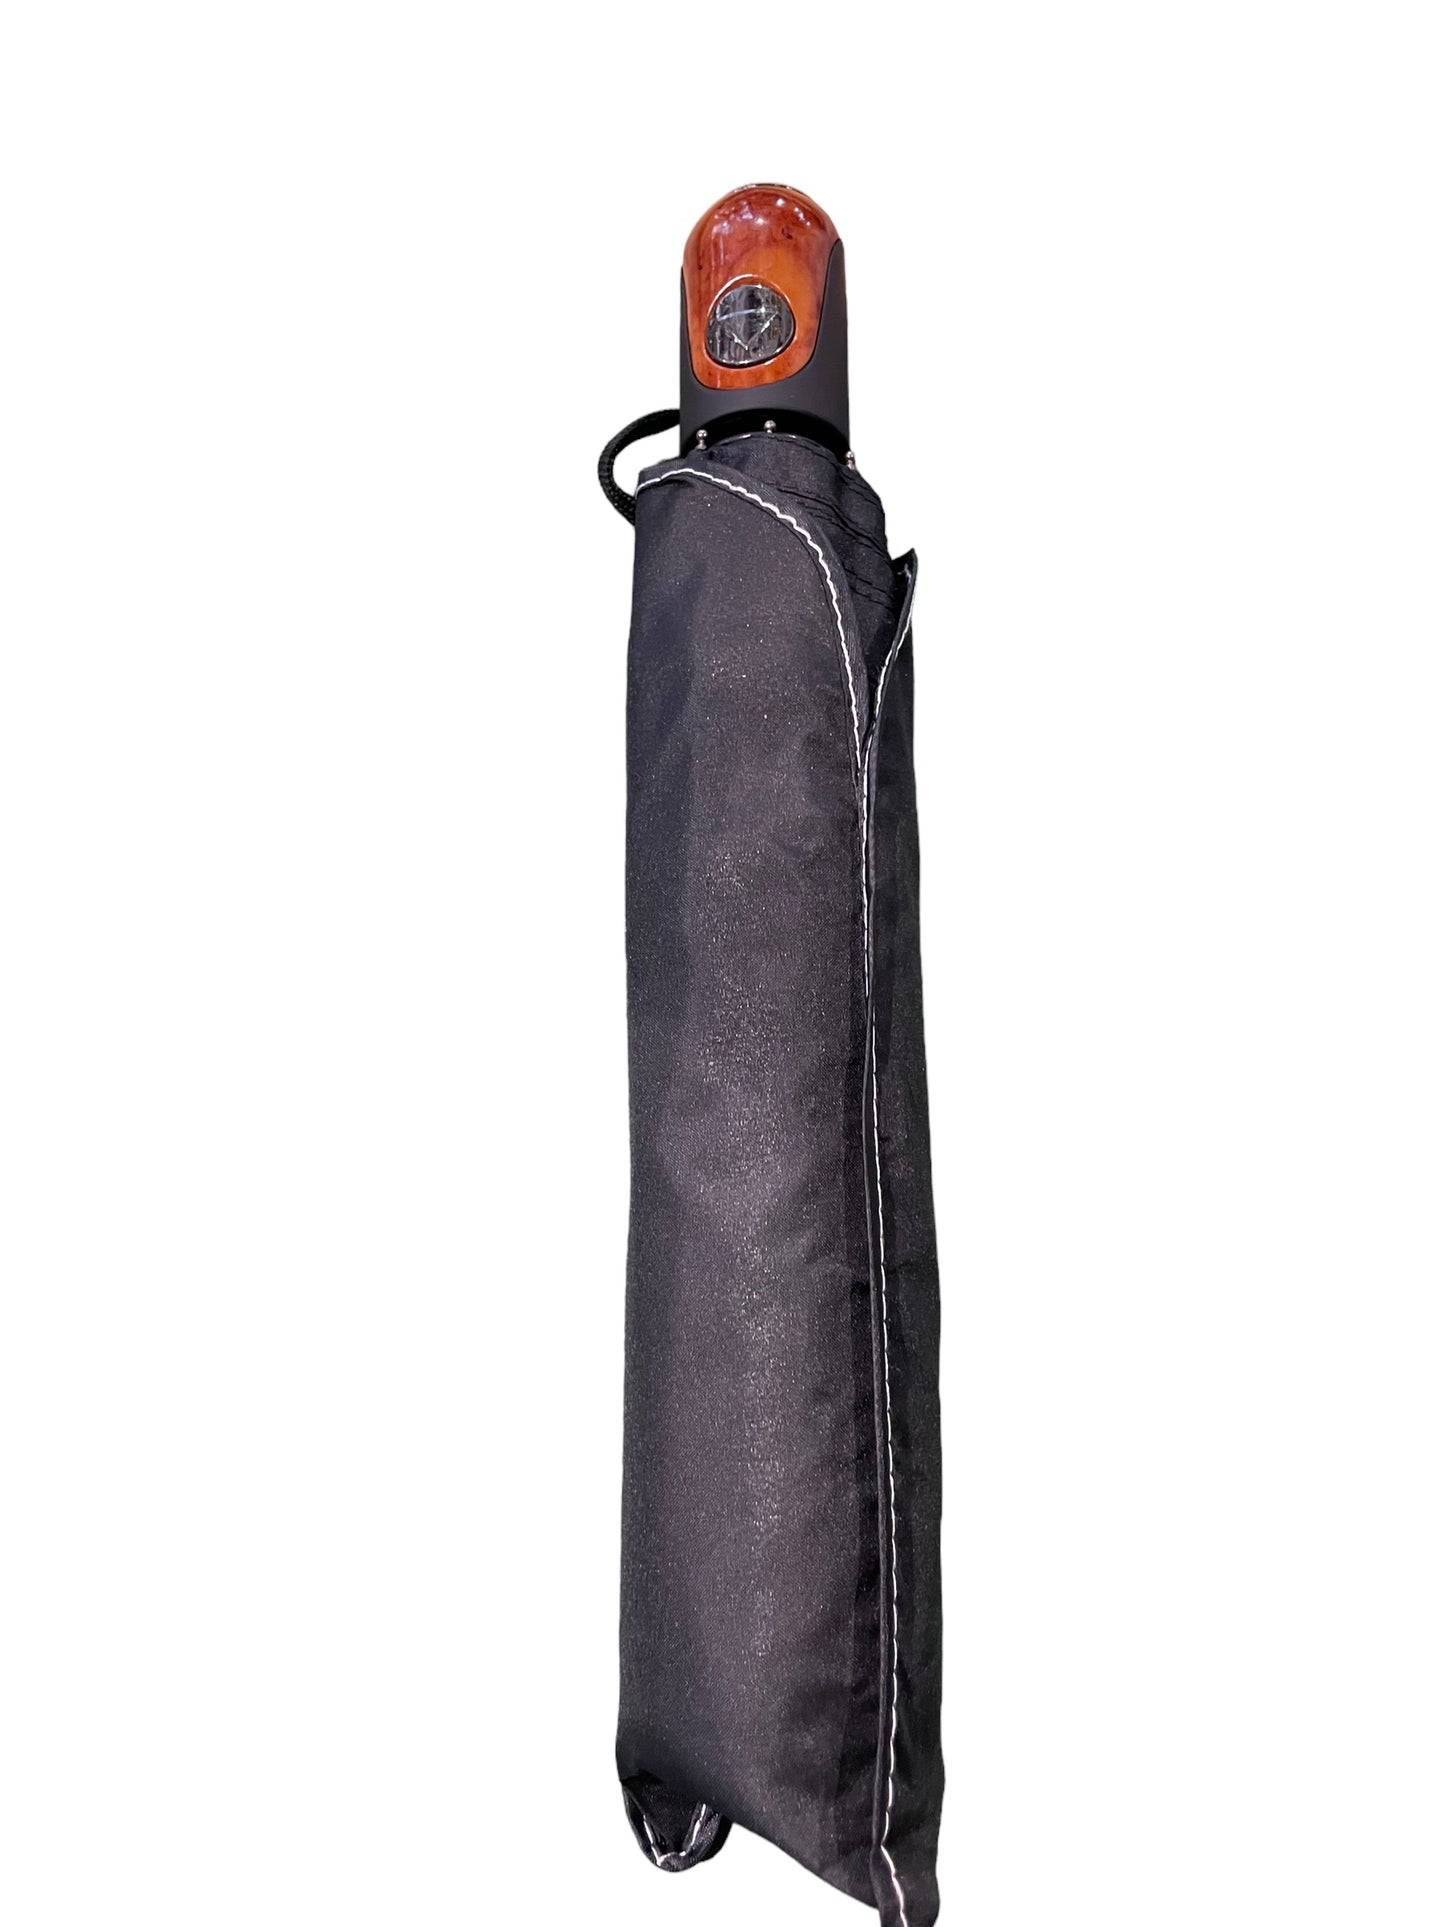 Solid Khaki Outline Compact Travel Size Umbrella